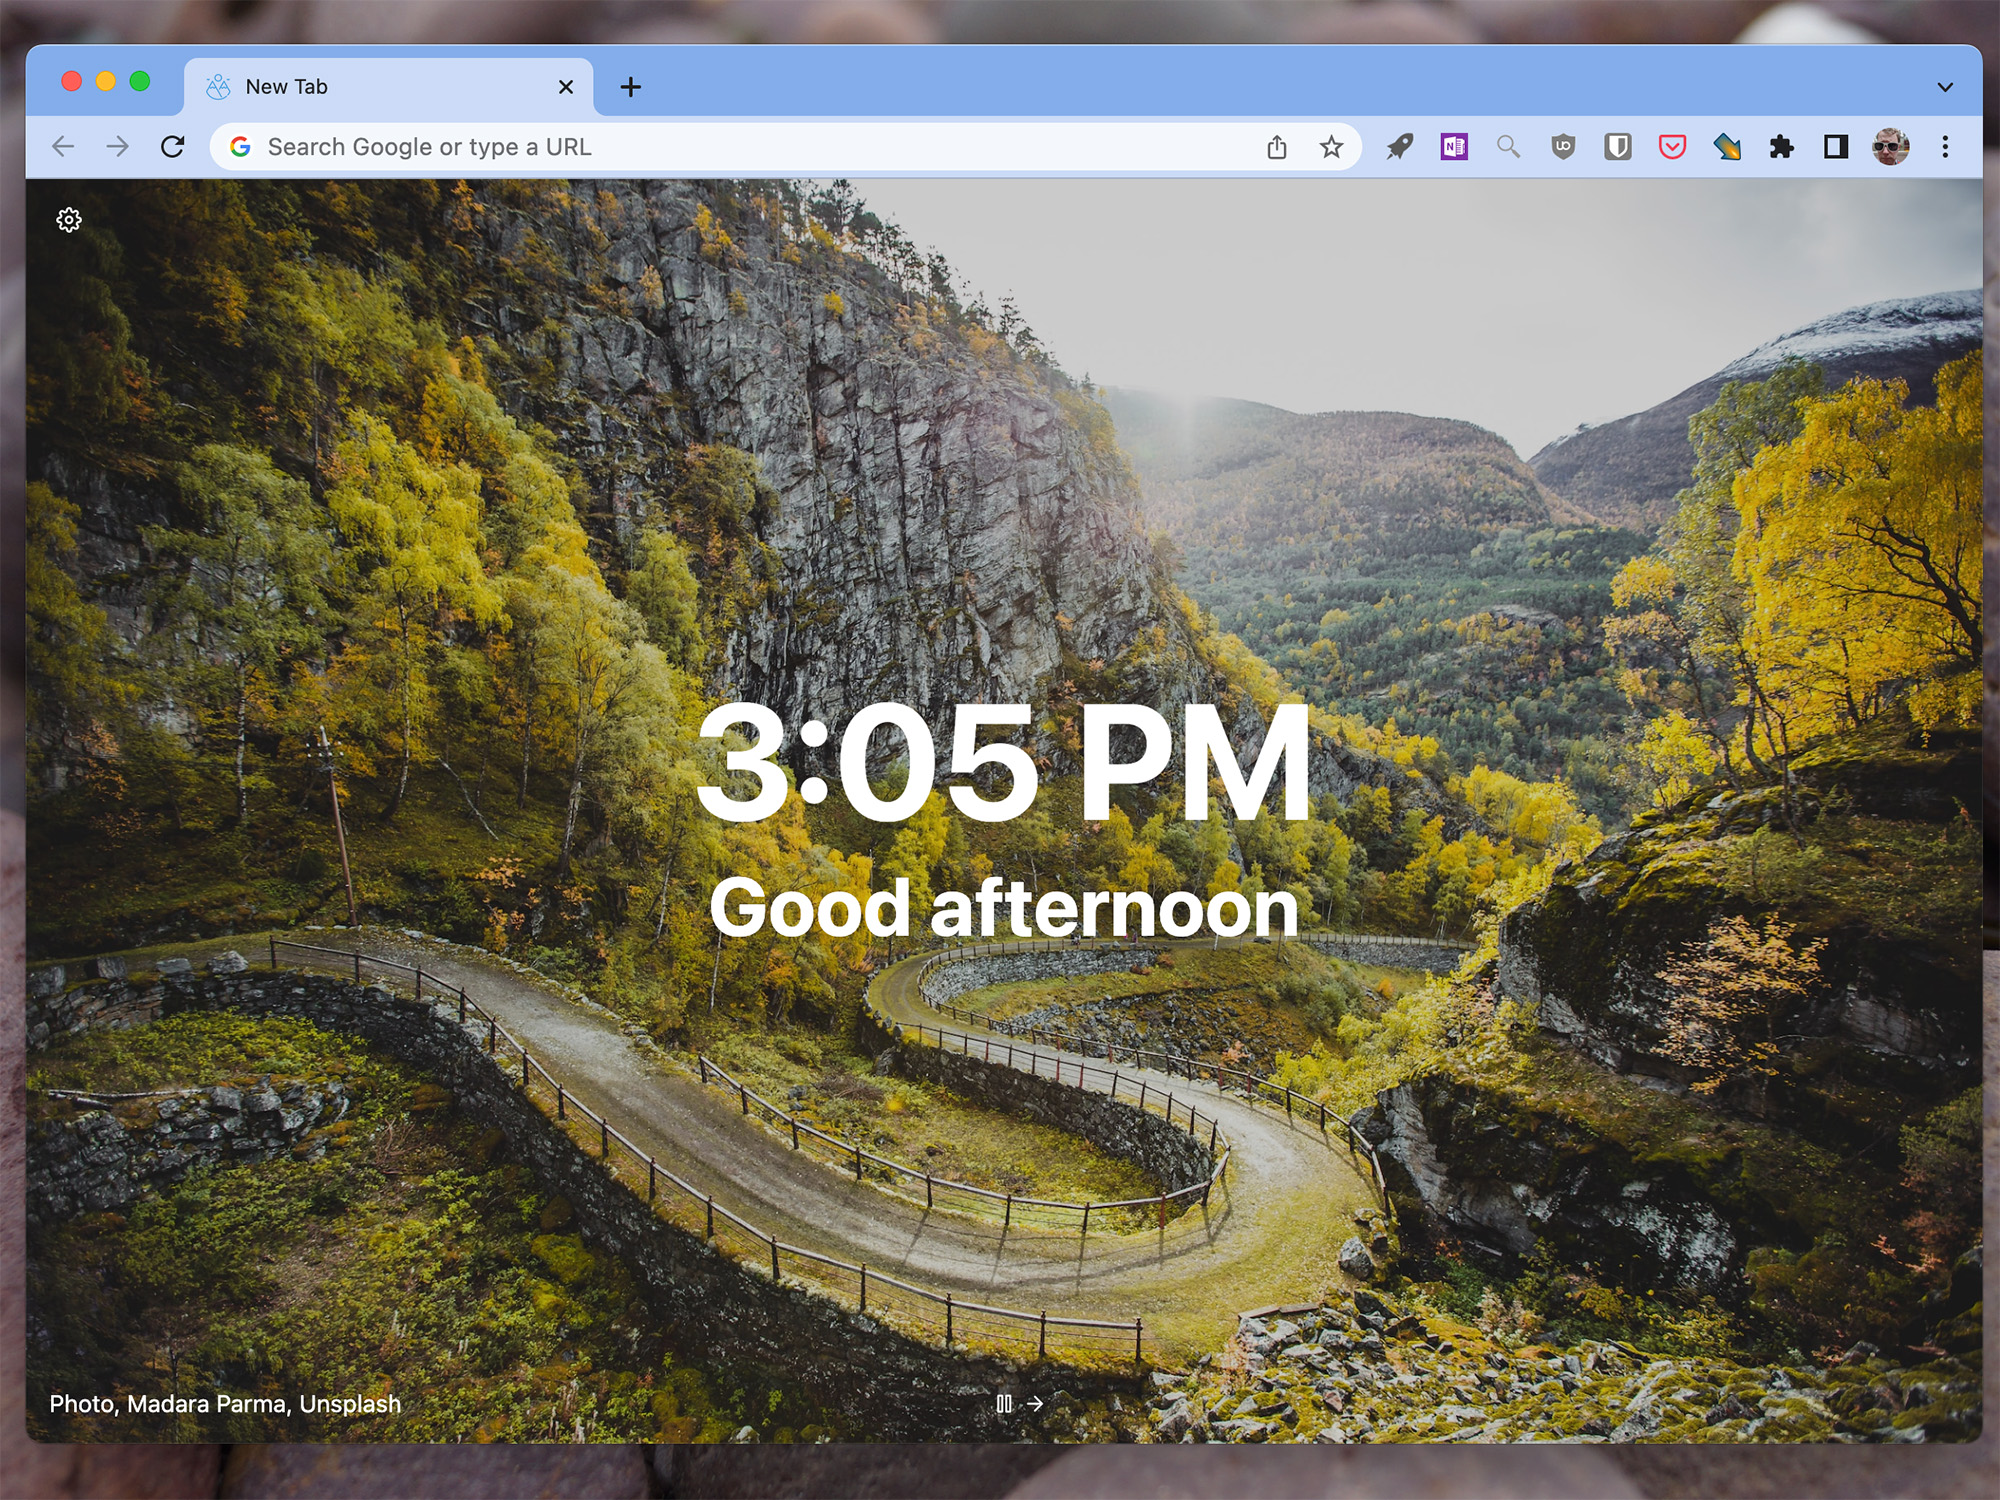 4 ways to customize Google Chrome’s new tab page